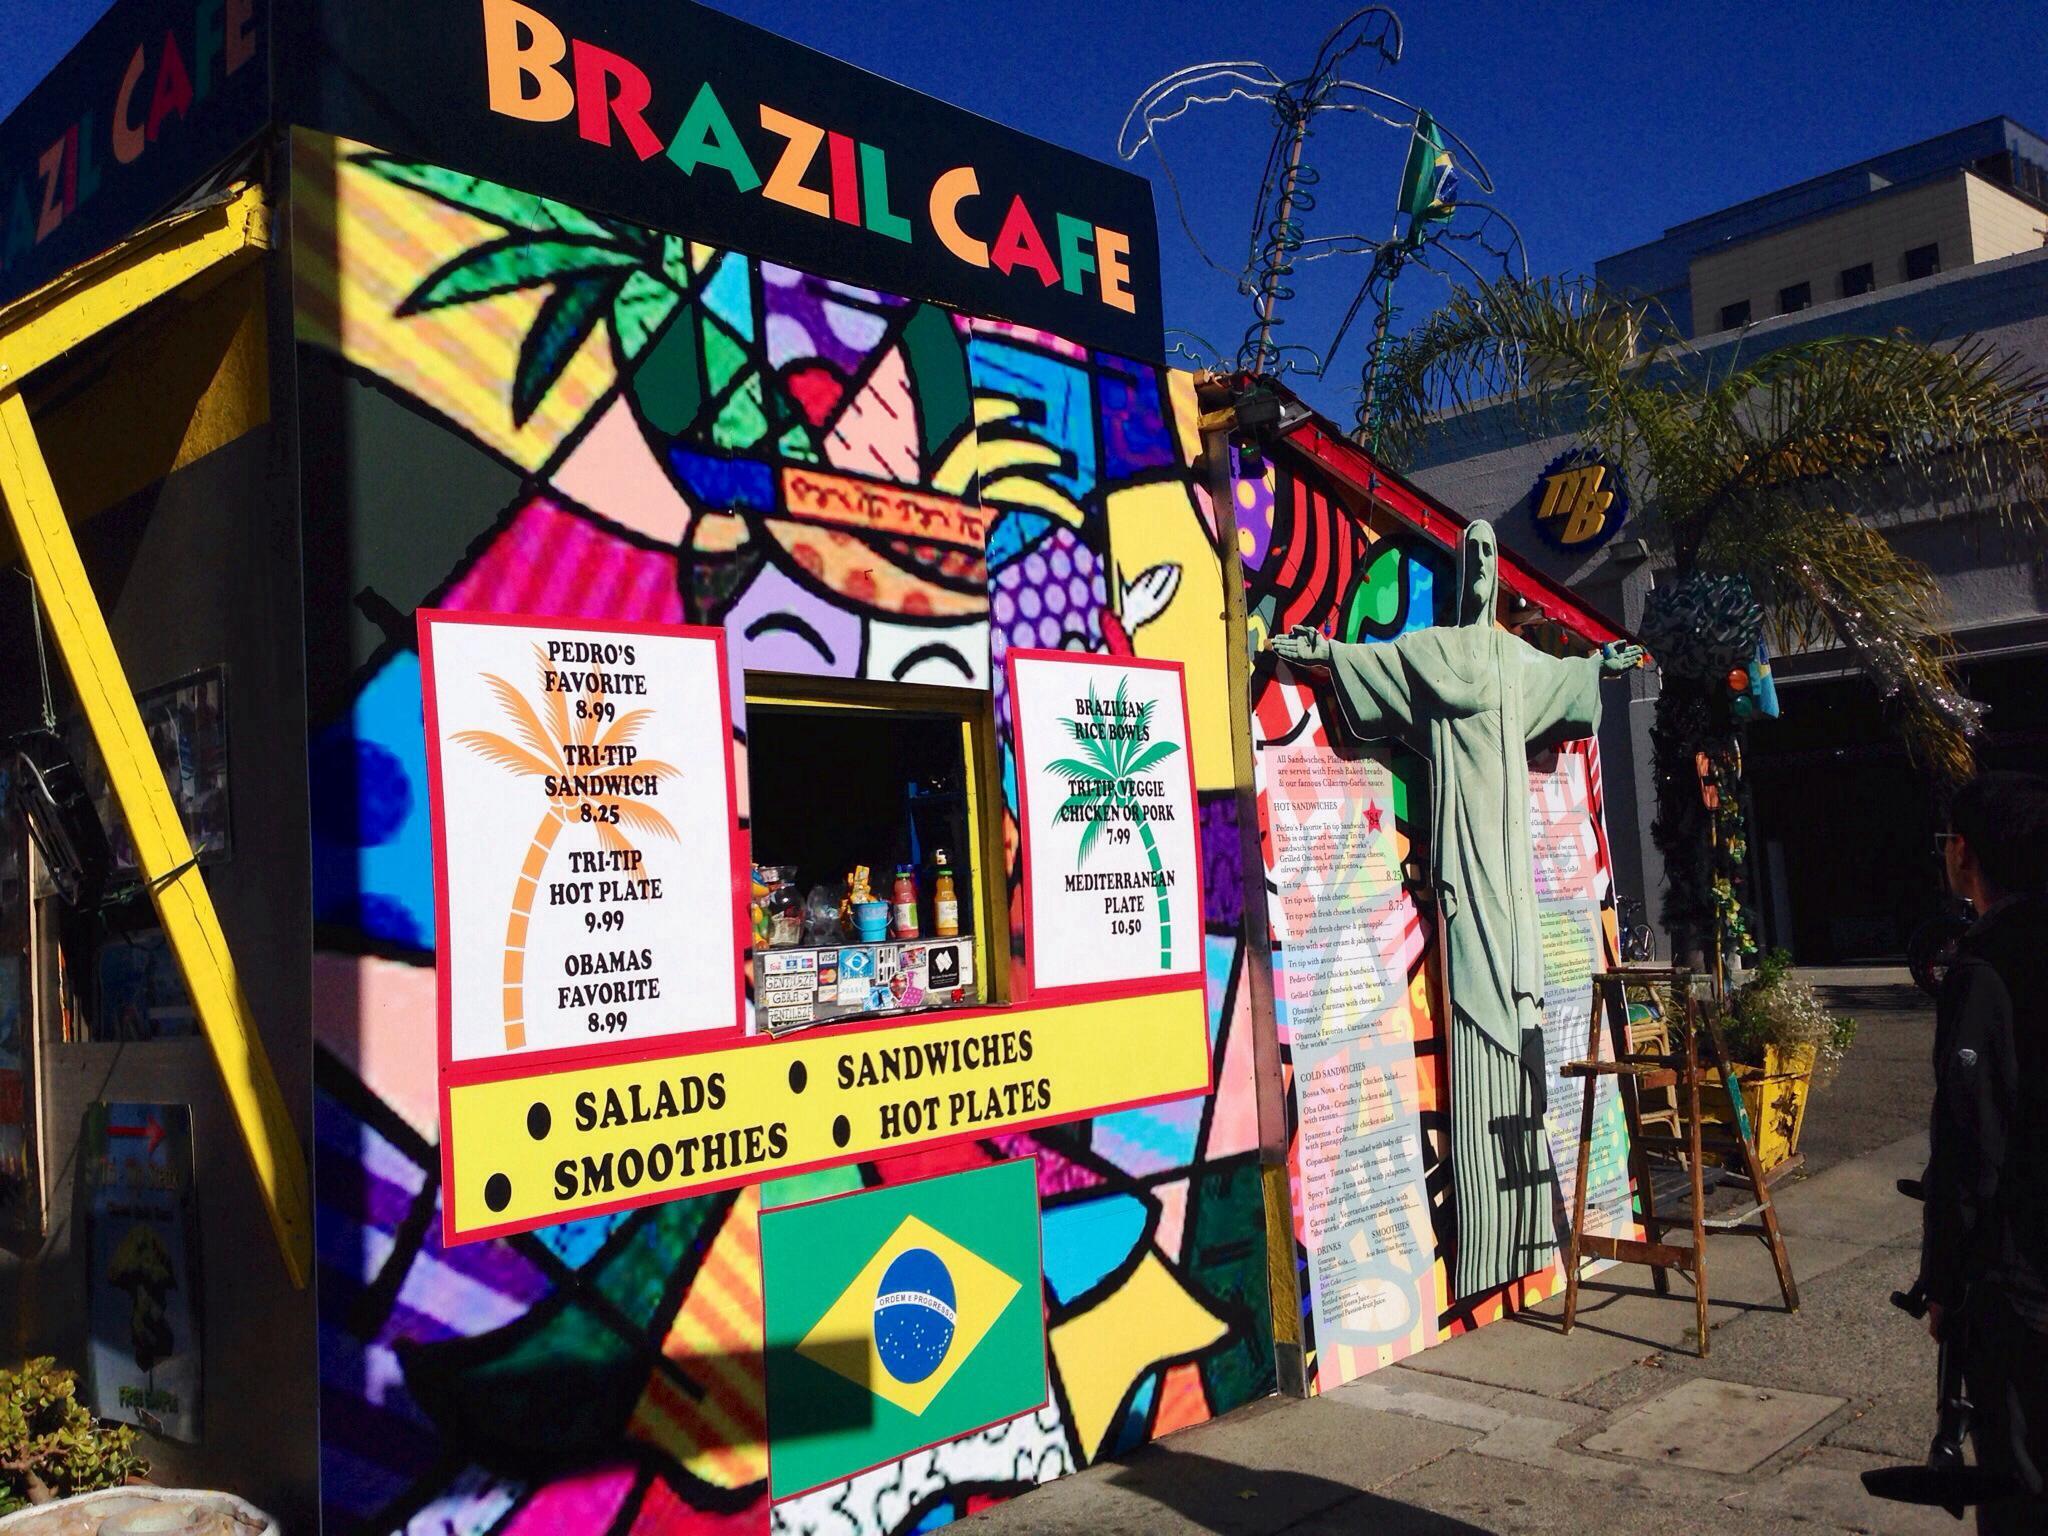 Pet Friendly Pedro's Brazil Cafe